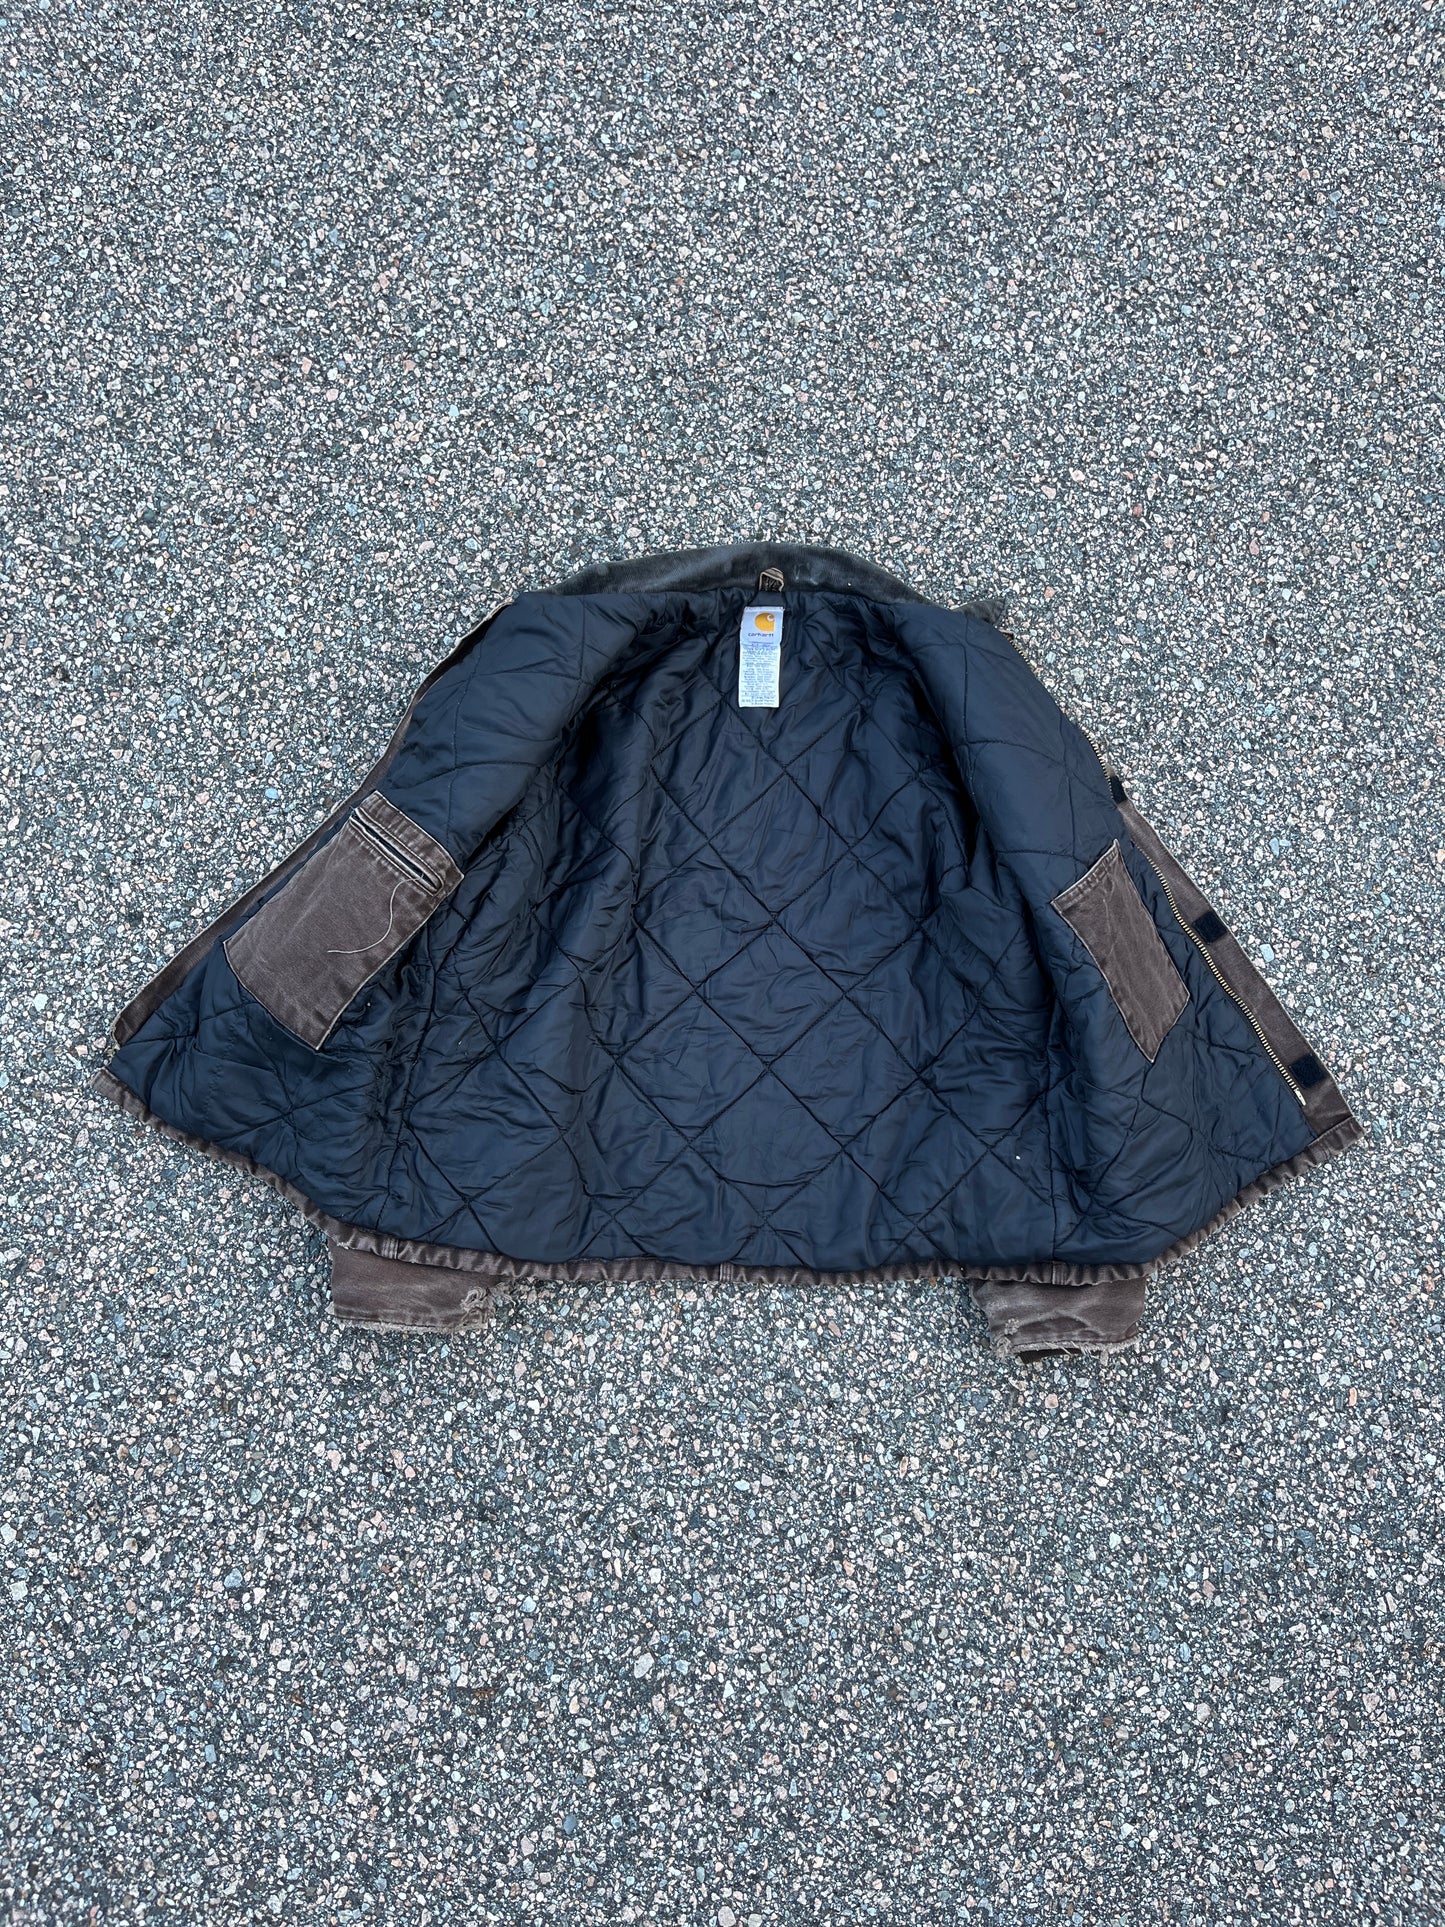 Faded Brown Carhartt Arctic Jacket - Fits L-XL